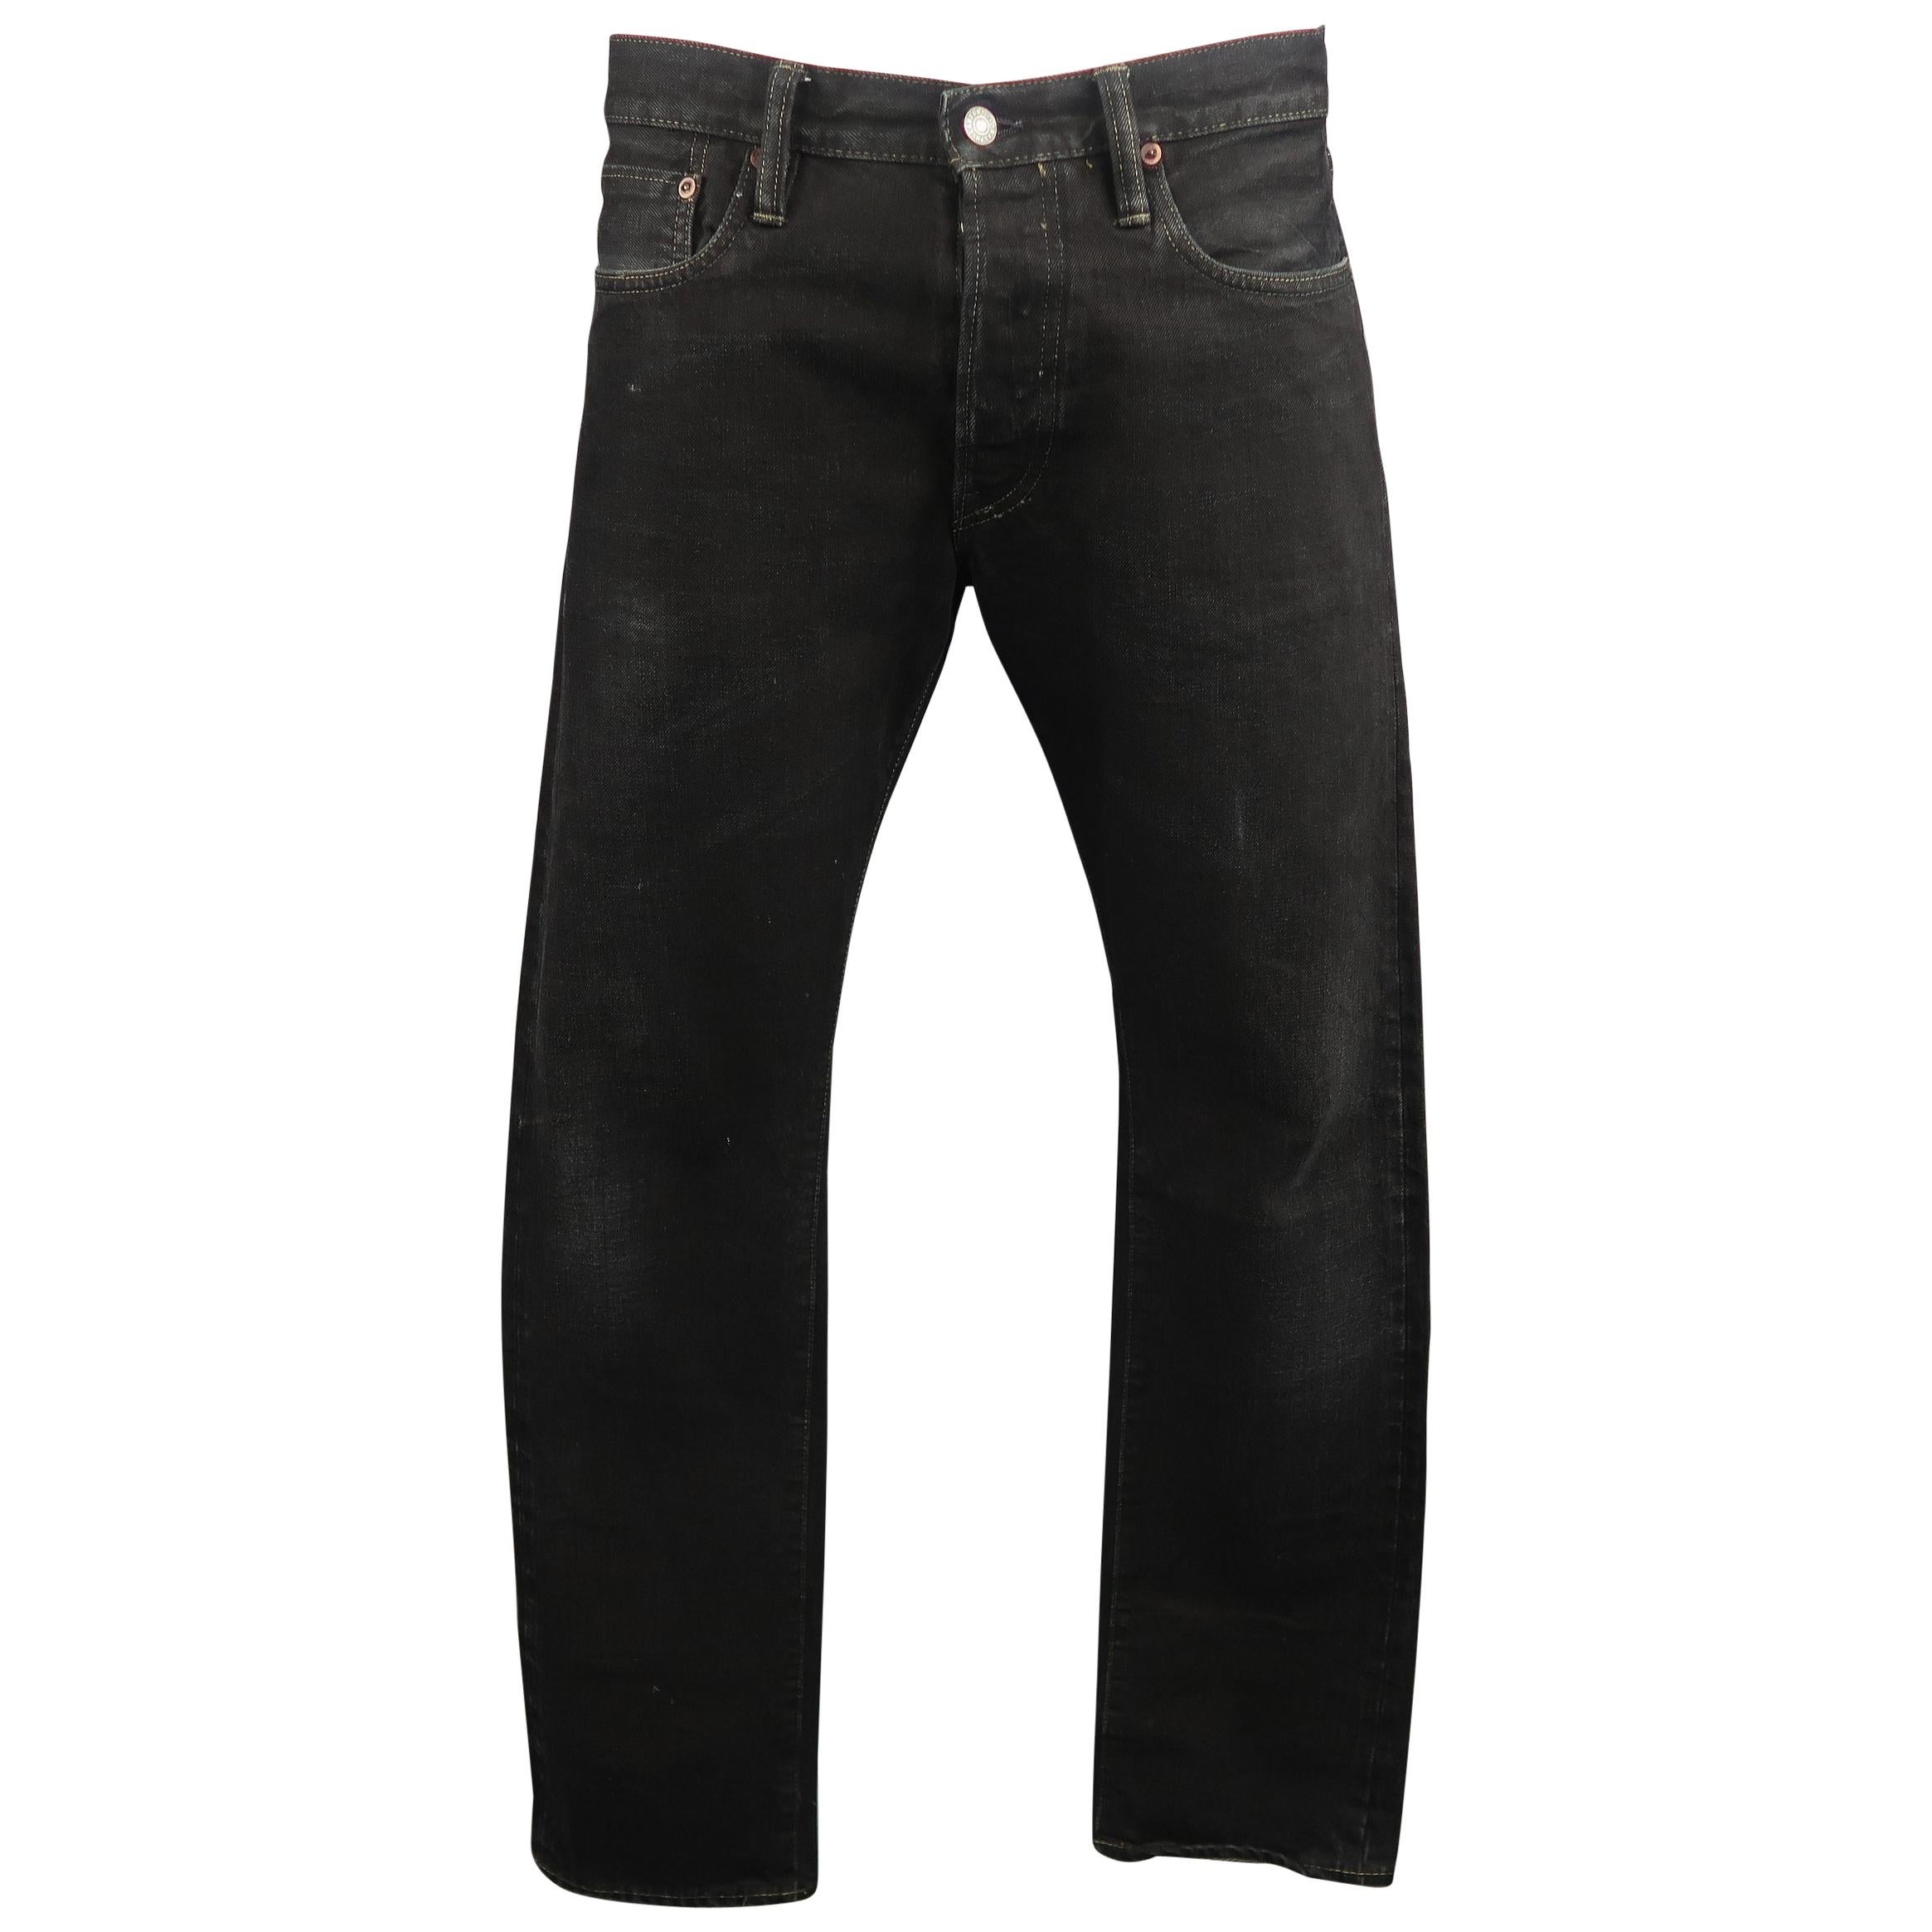 RRL by Ralph Lauren Black Washed Selvedge Denim Jeans